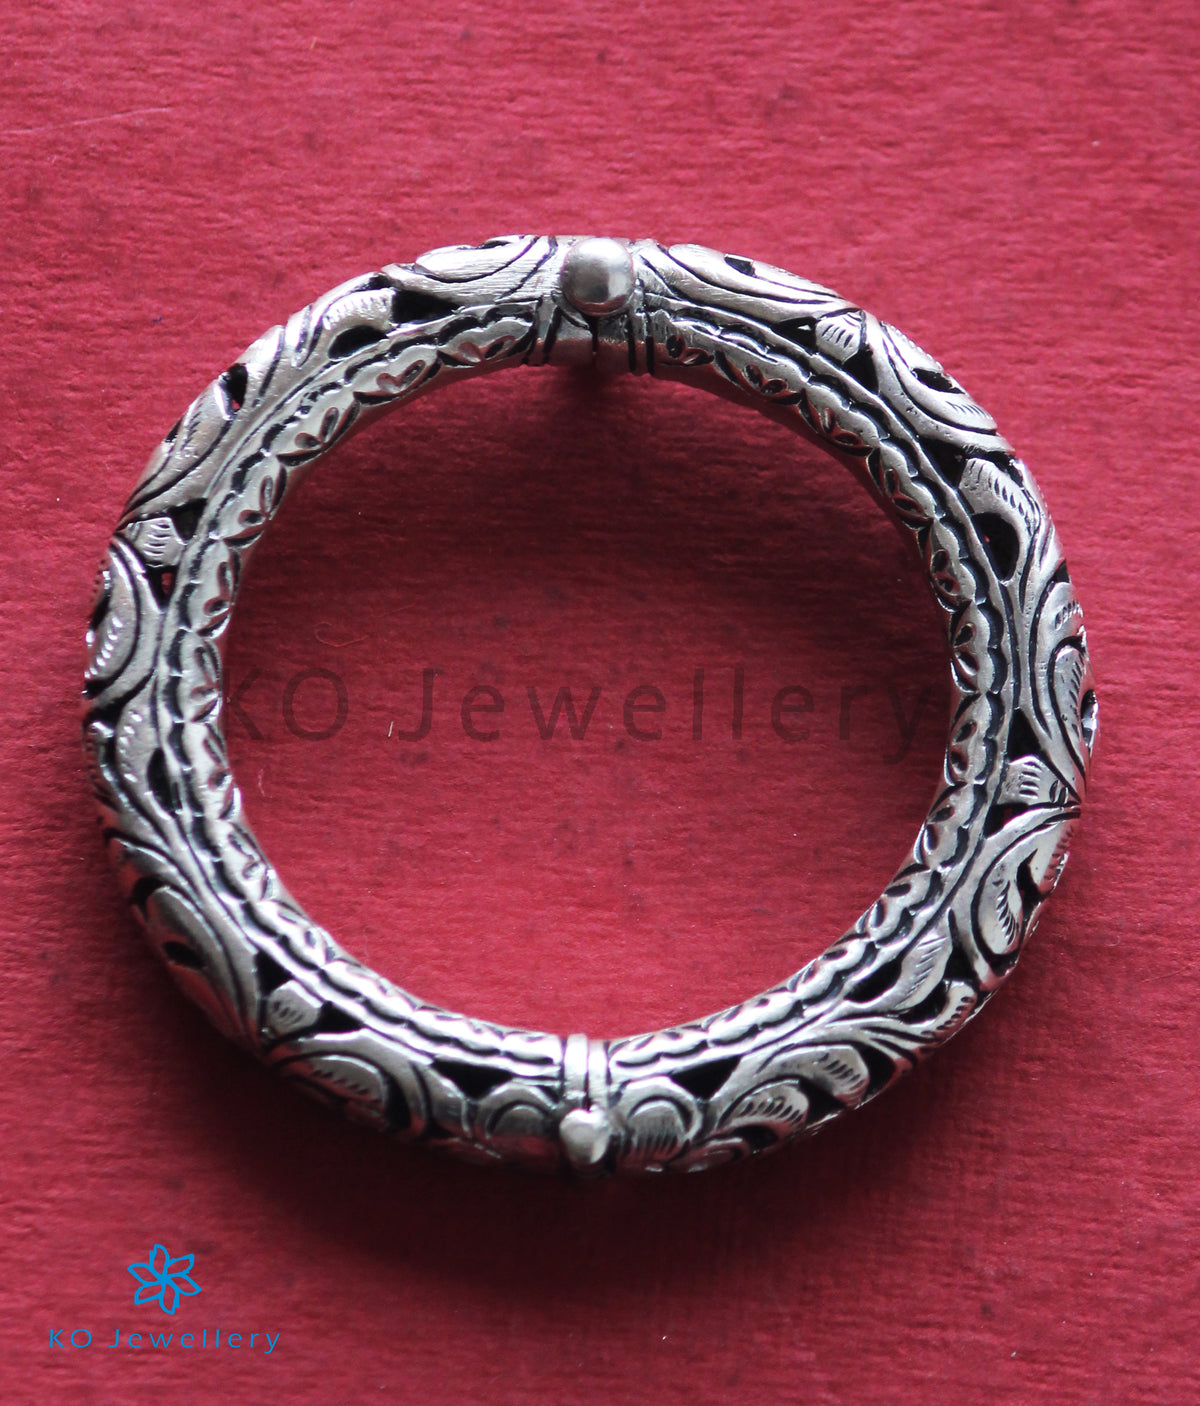 Buy Jewel99 Sterling Silver Platinum Plated Lion Engraved Bracelet for Boys  at Amazonin